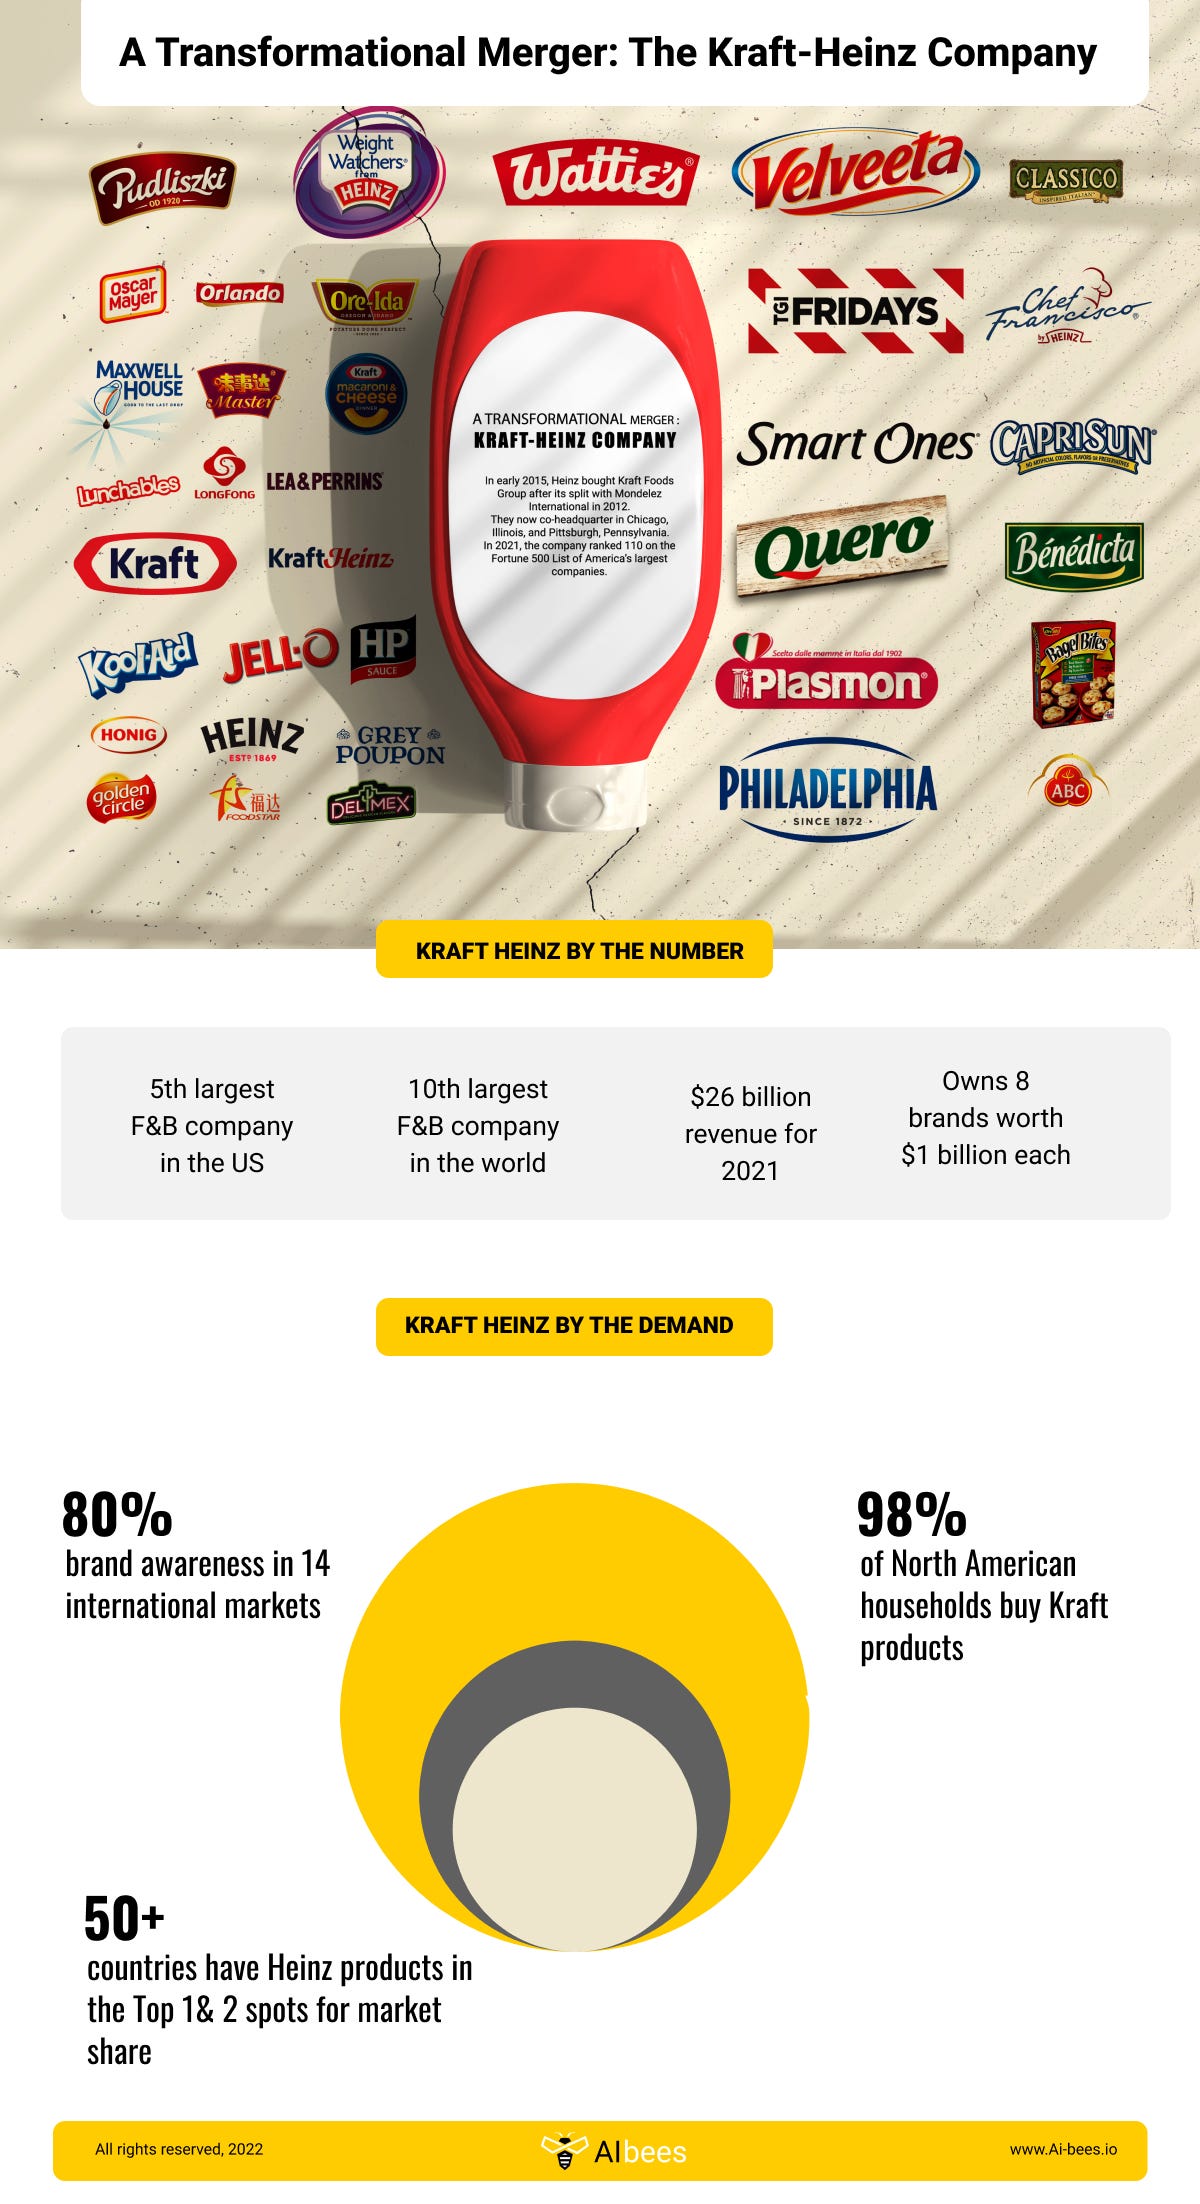 CSPI urges Kraft Heinz to end disparagement of healthy food in advertising